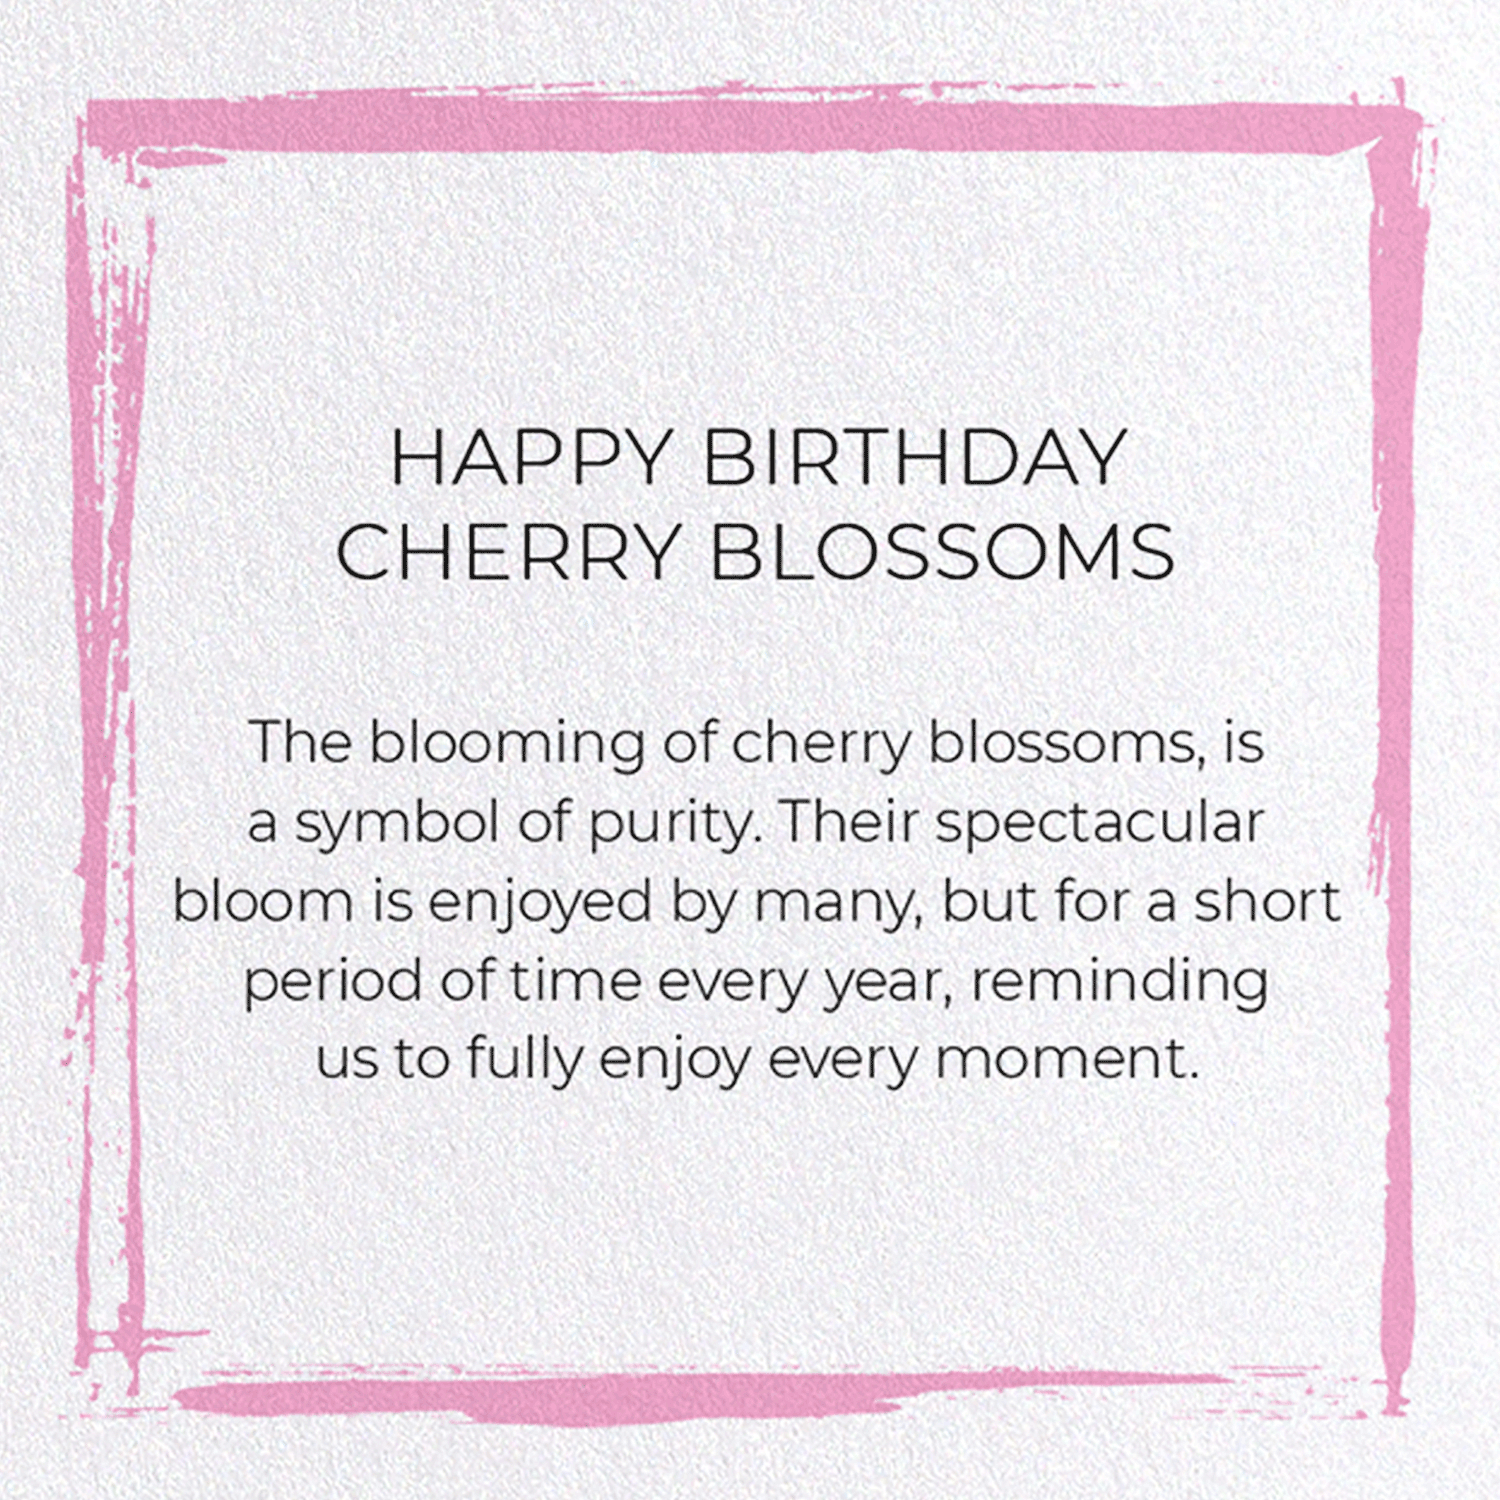 HAPPY BIRTHDAY CHERRY BLOSSOMS: Japanese Greeting Card